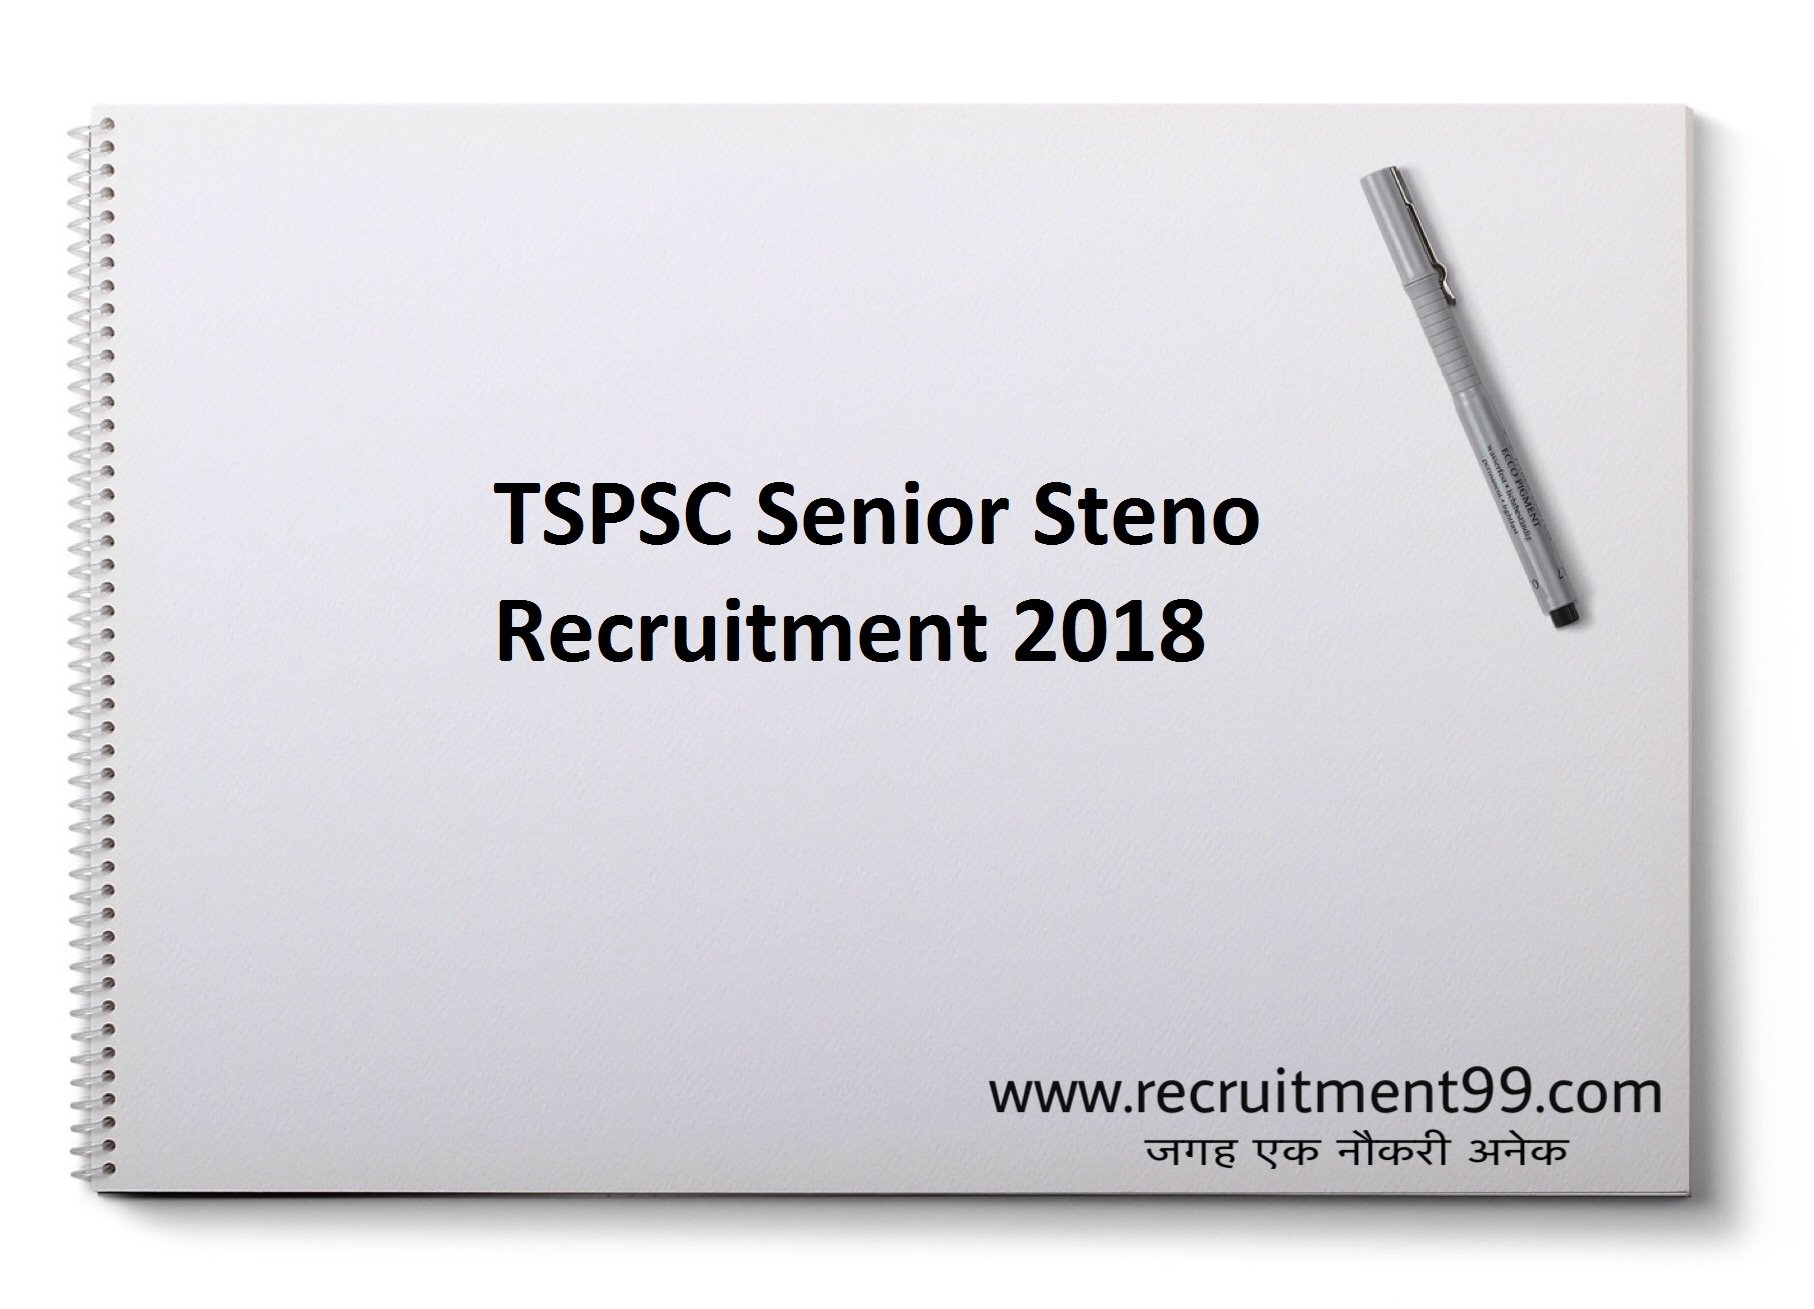 TSPSC Senior Steno Recruitment Hall ticket Result 2018